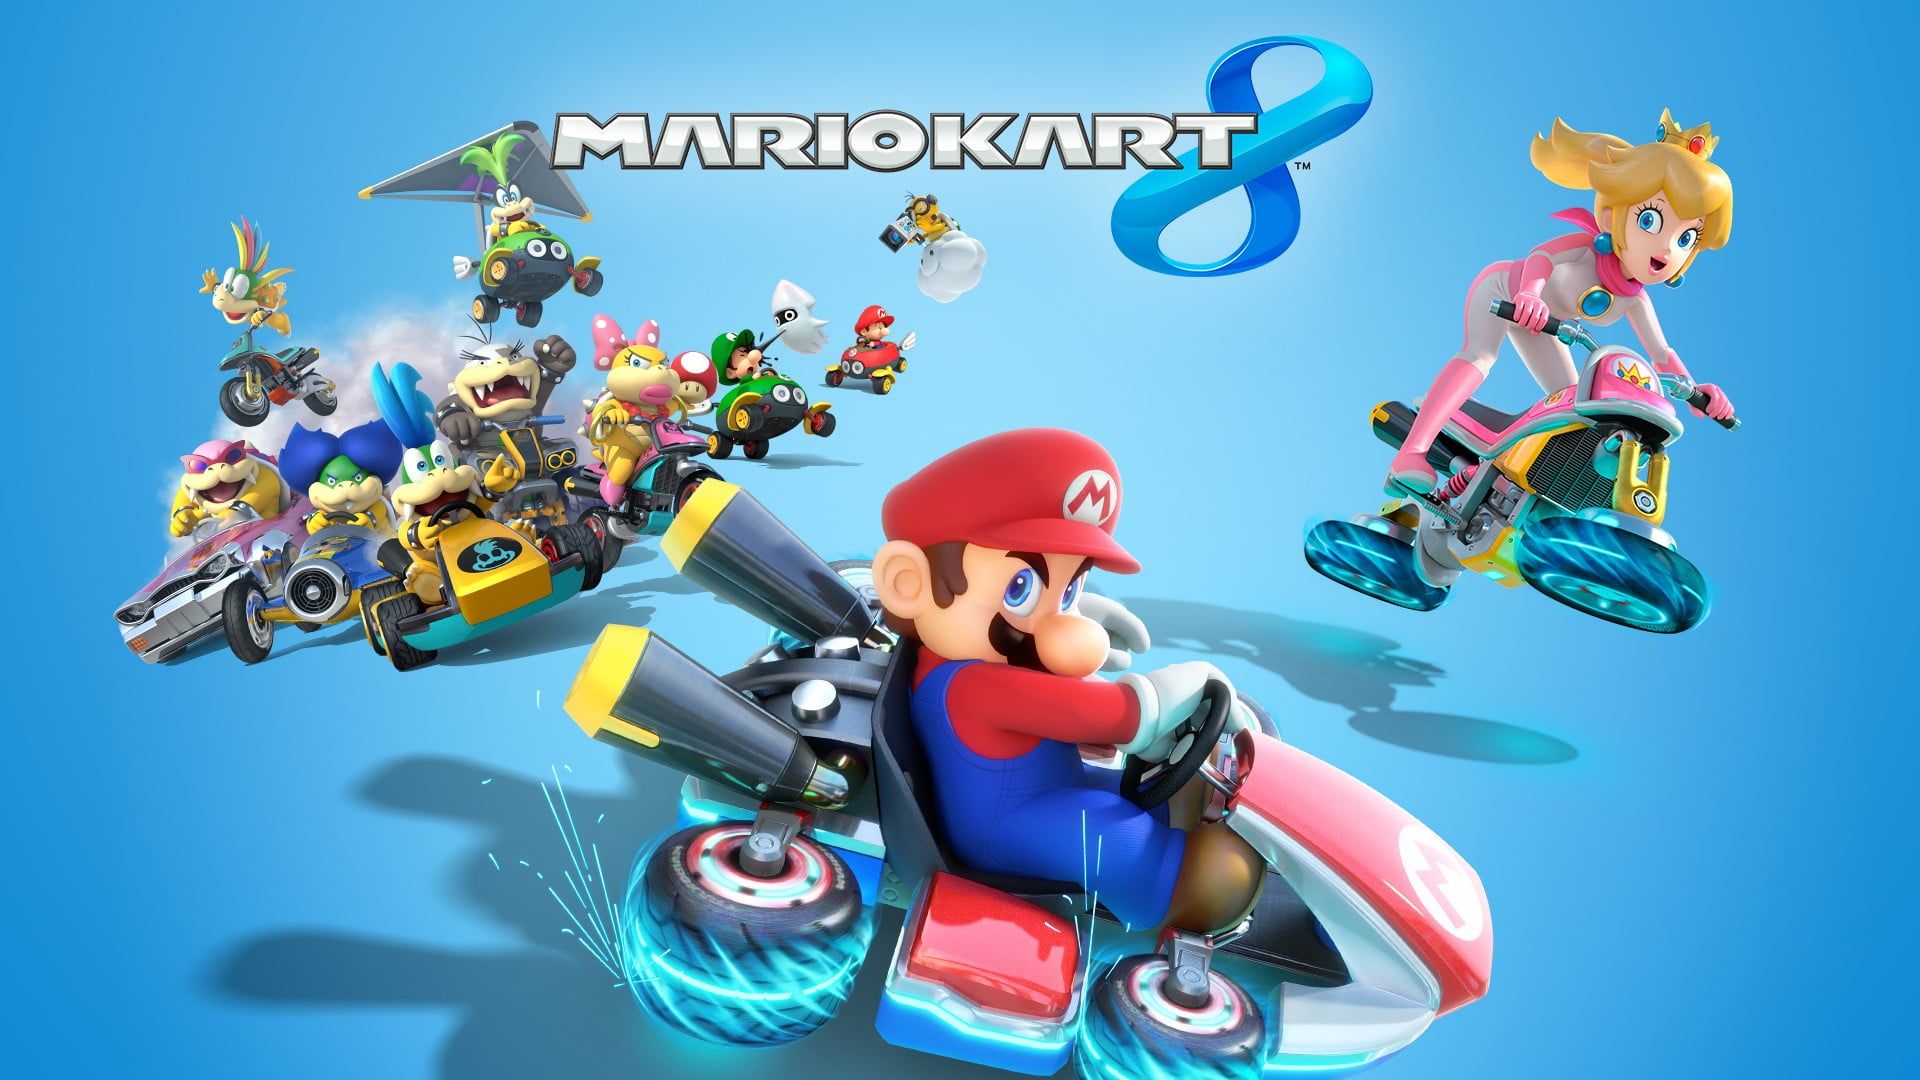 Mariokart poster, Mario Kart video games, Toad character